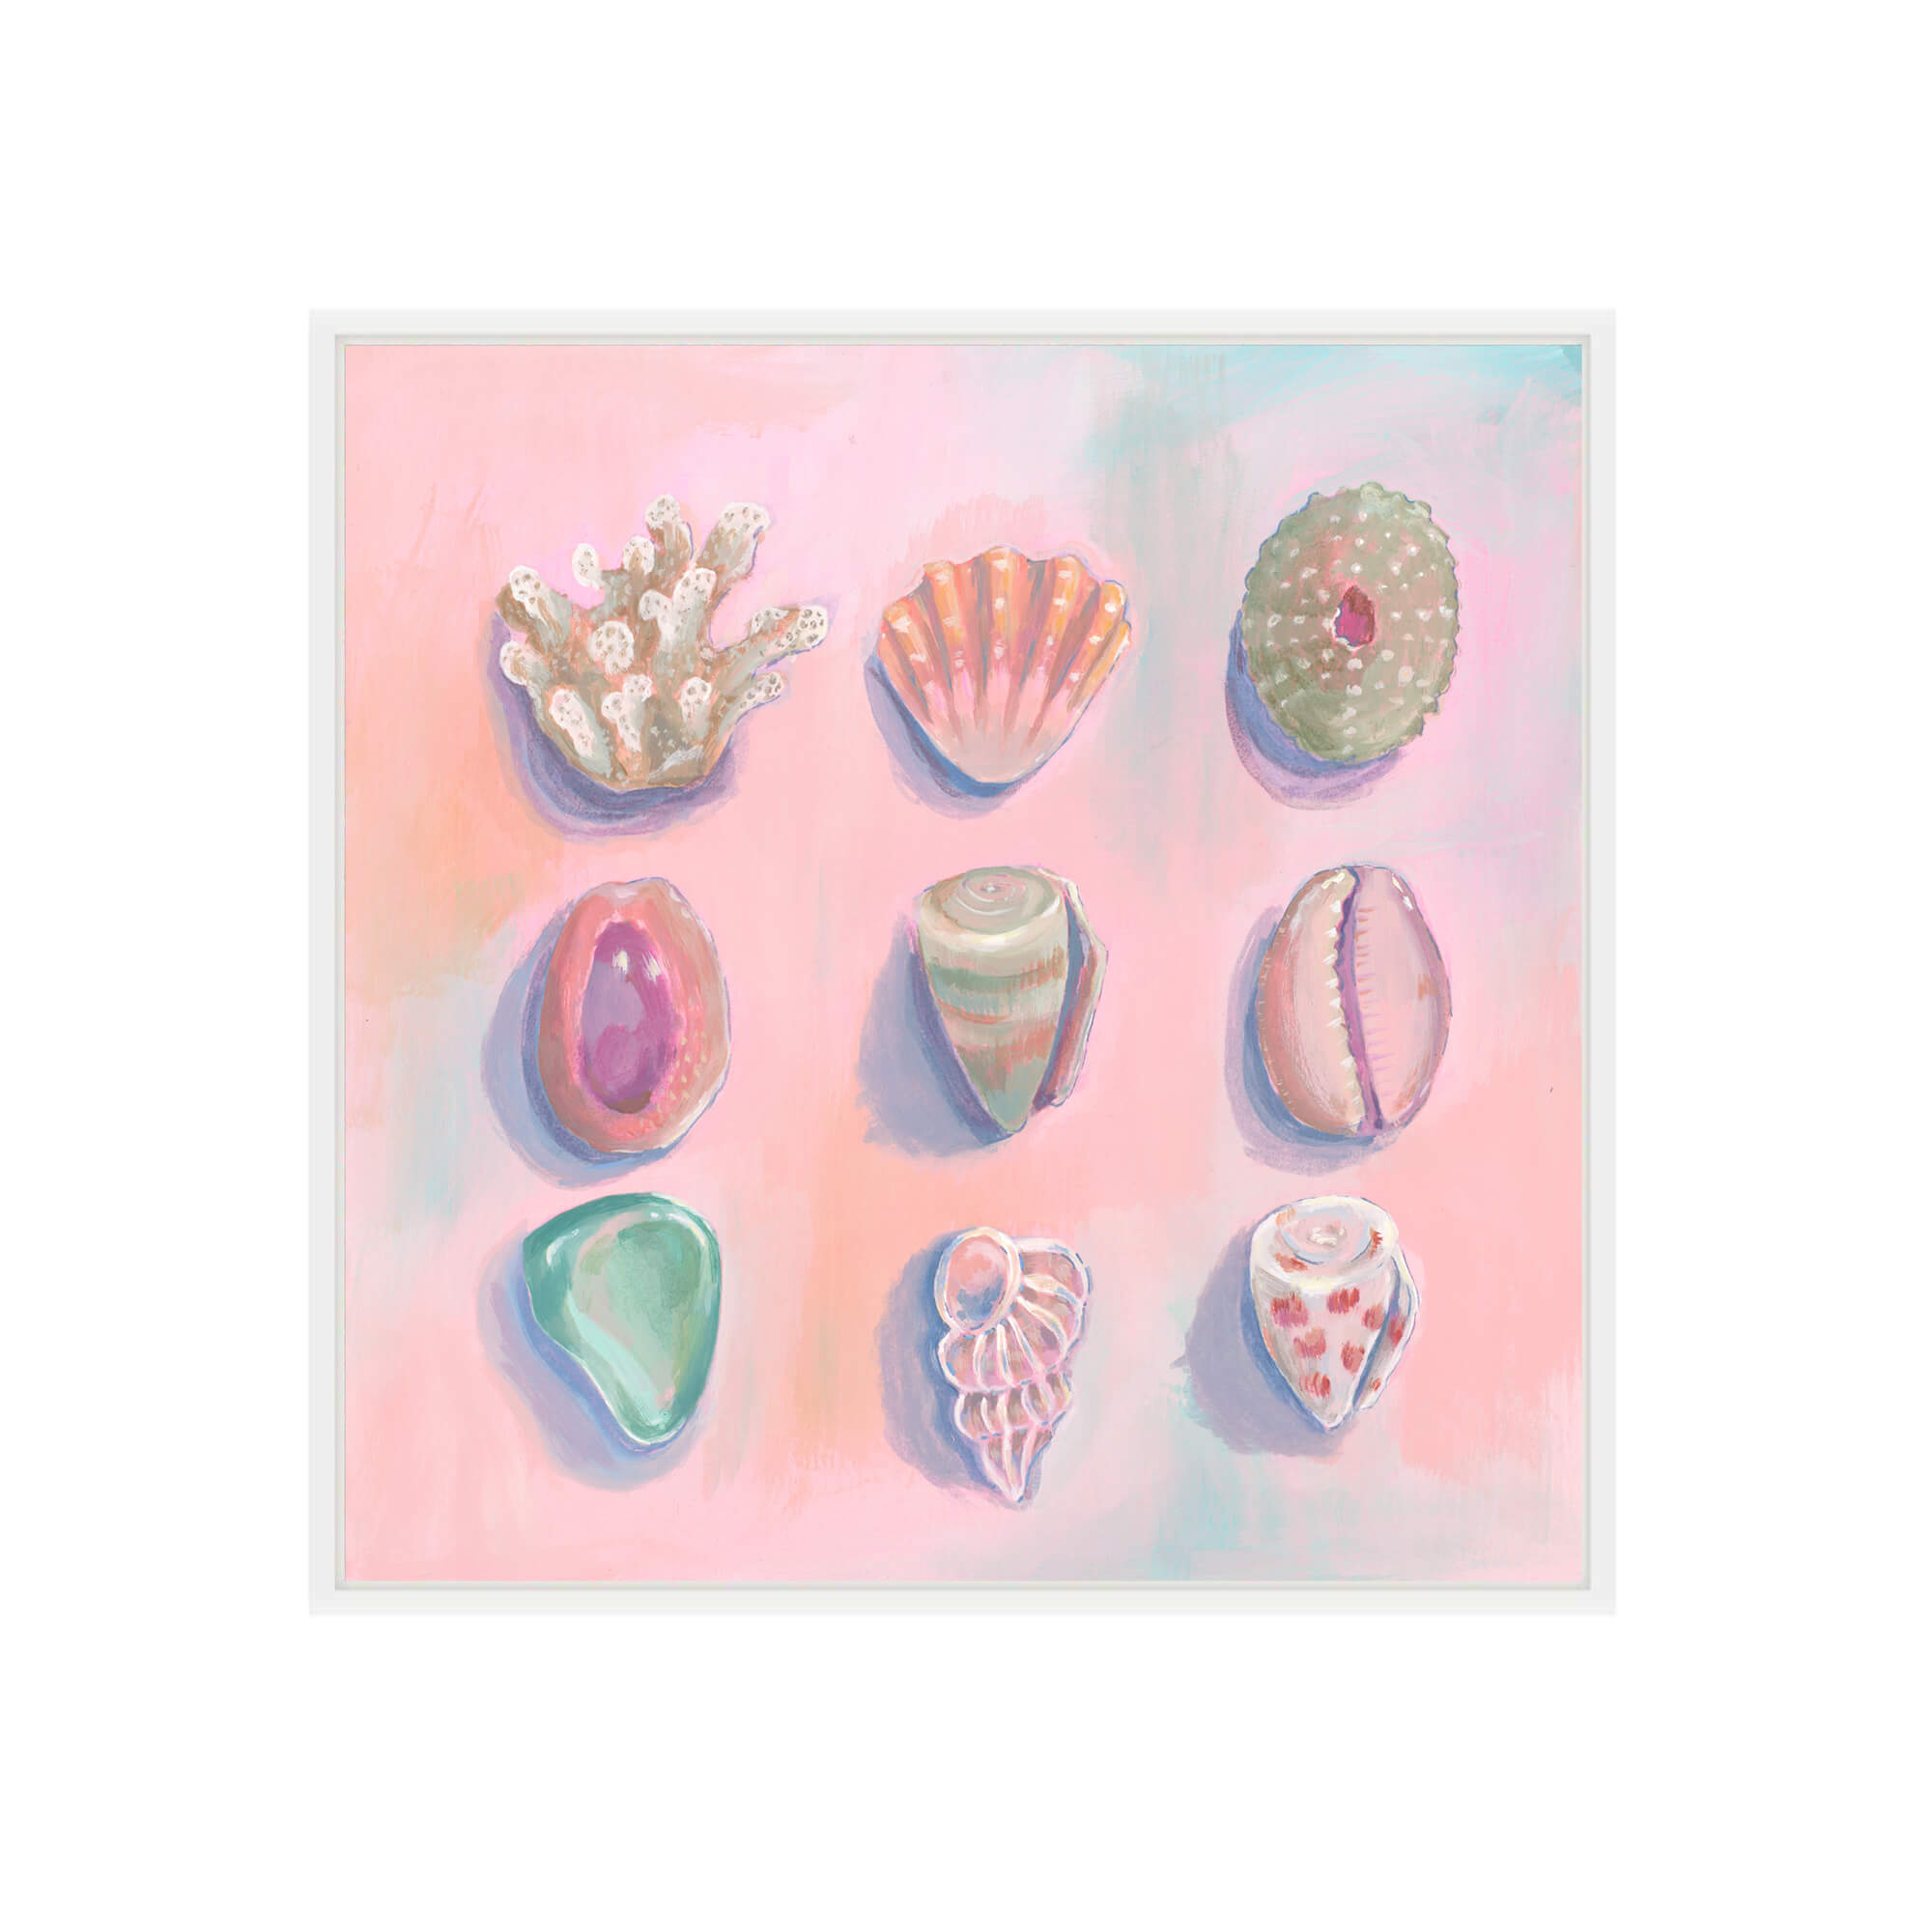 Different kinds of seashells by Hawaii artist Lindsay Wilkins